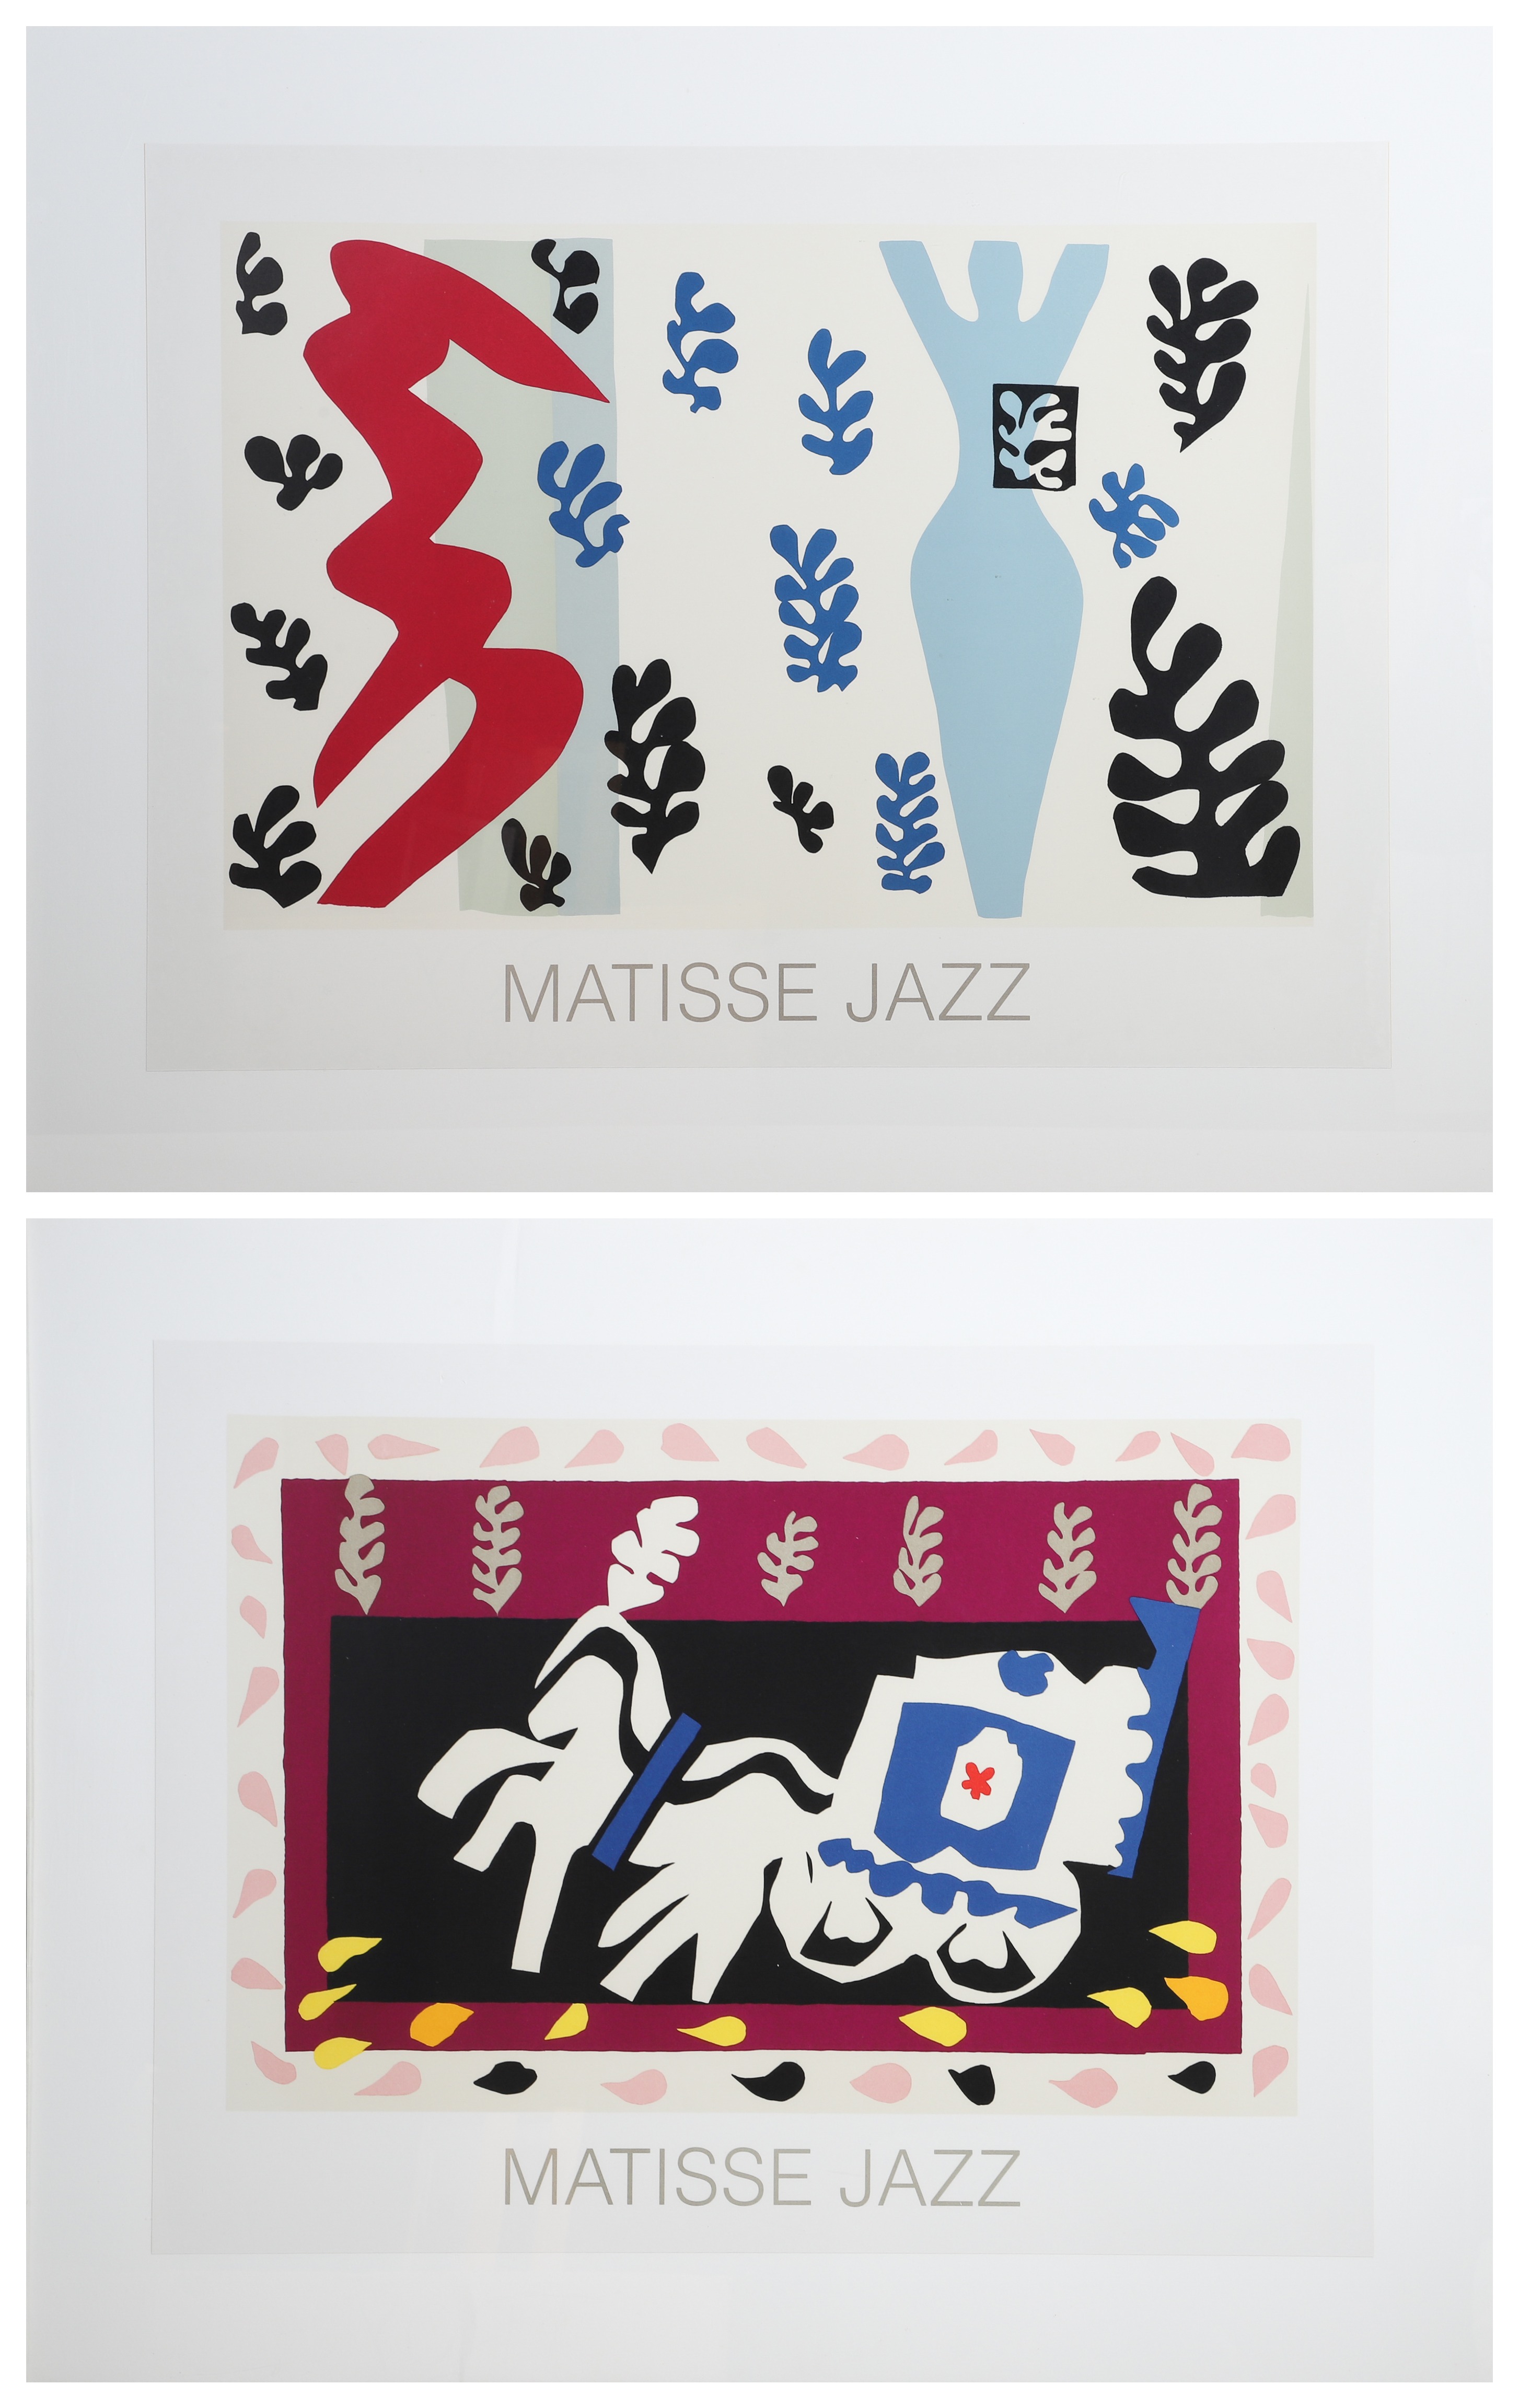 (2) Matisse jazz exhibition posters,